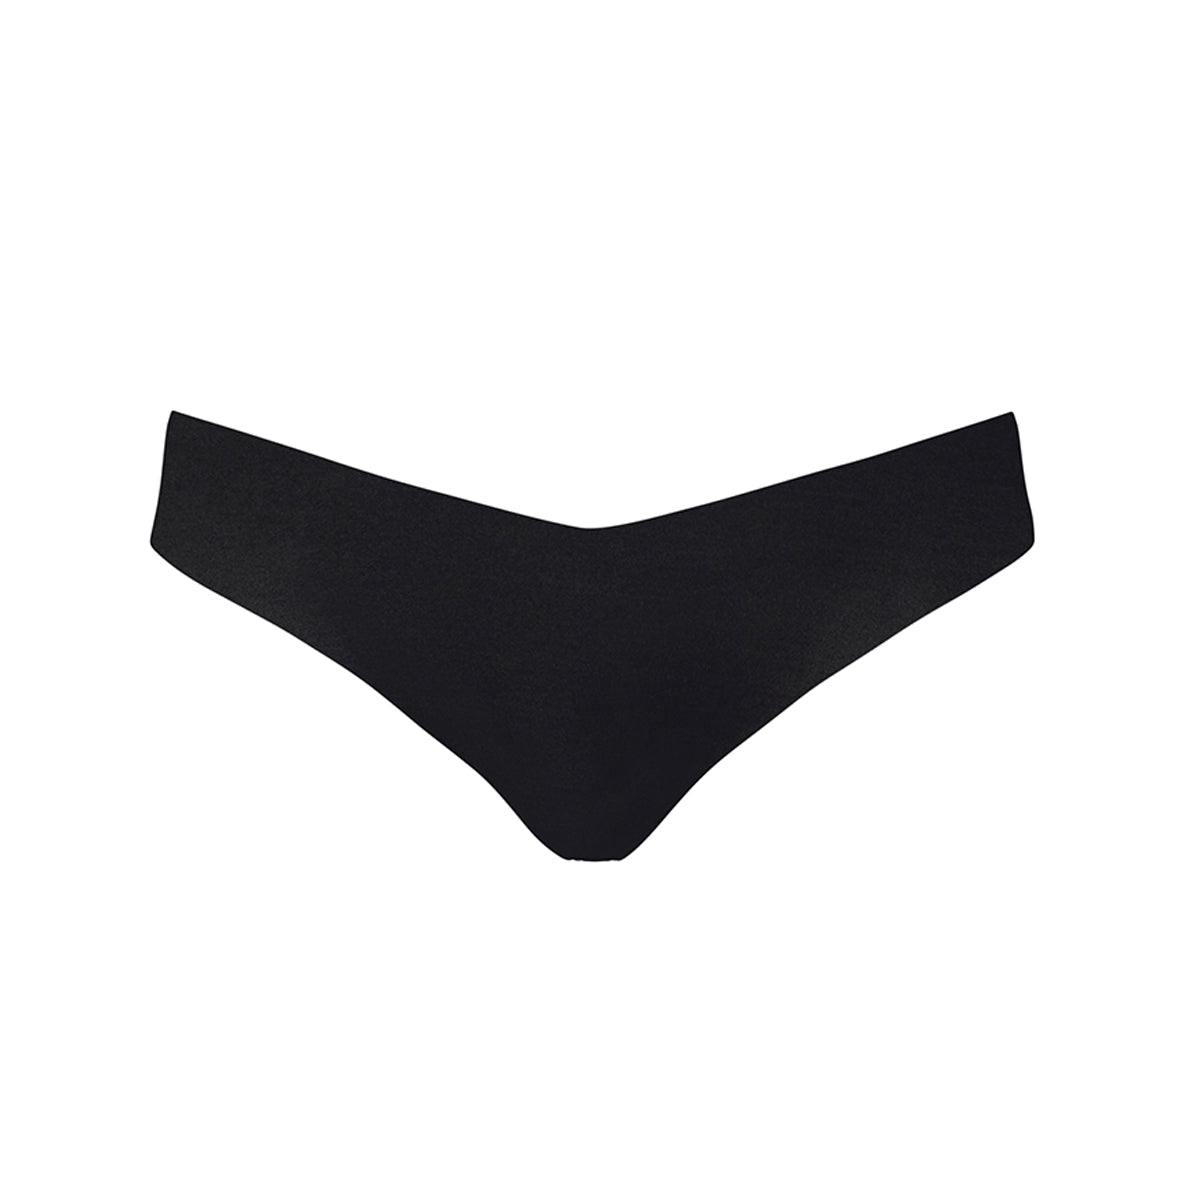 Best Deal for Black Seamless Underwear Women Panties Soft